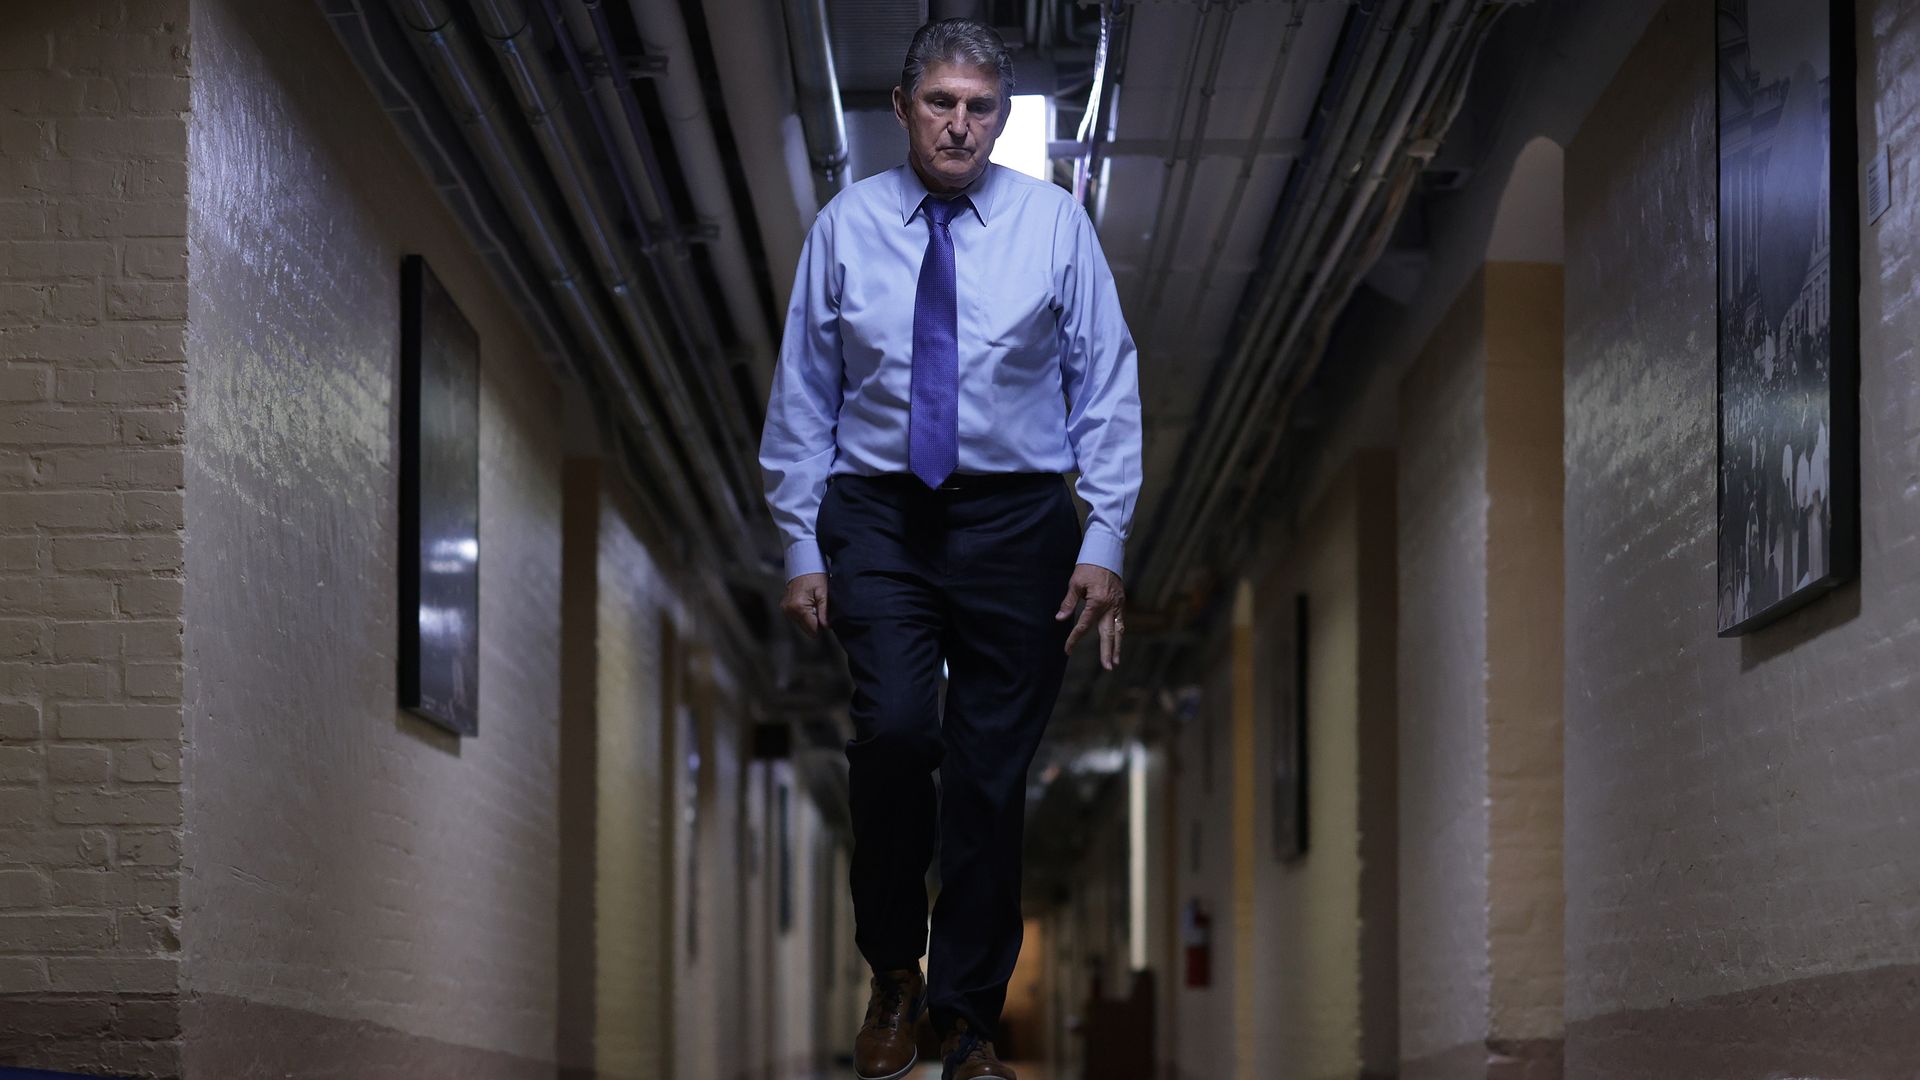 Sen. Joe Manchin is seen walking down a hall in the Capitol basement.